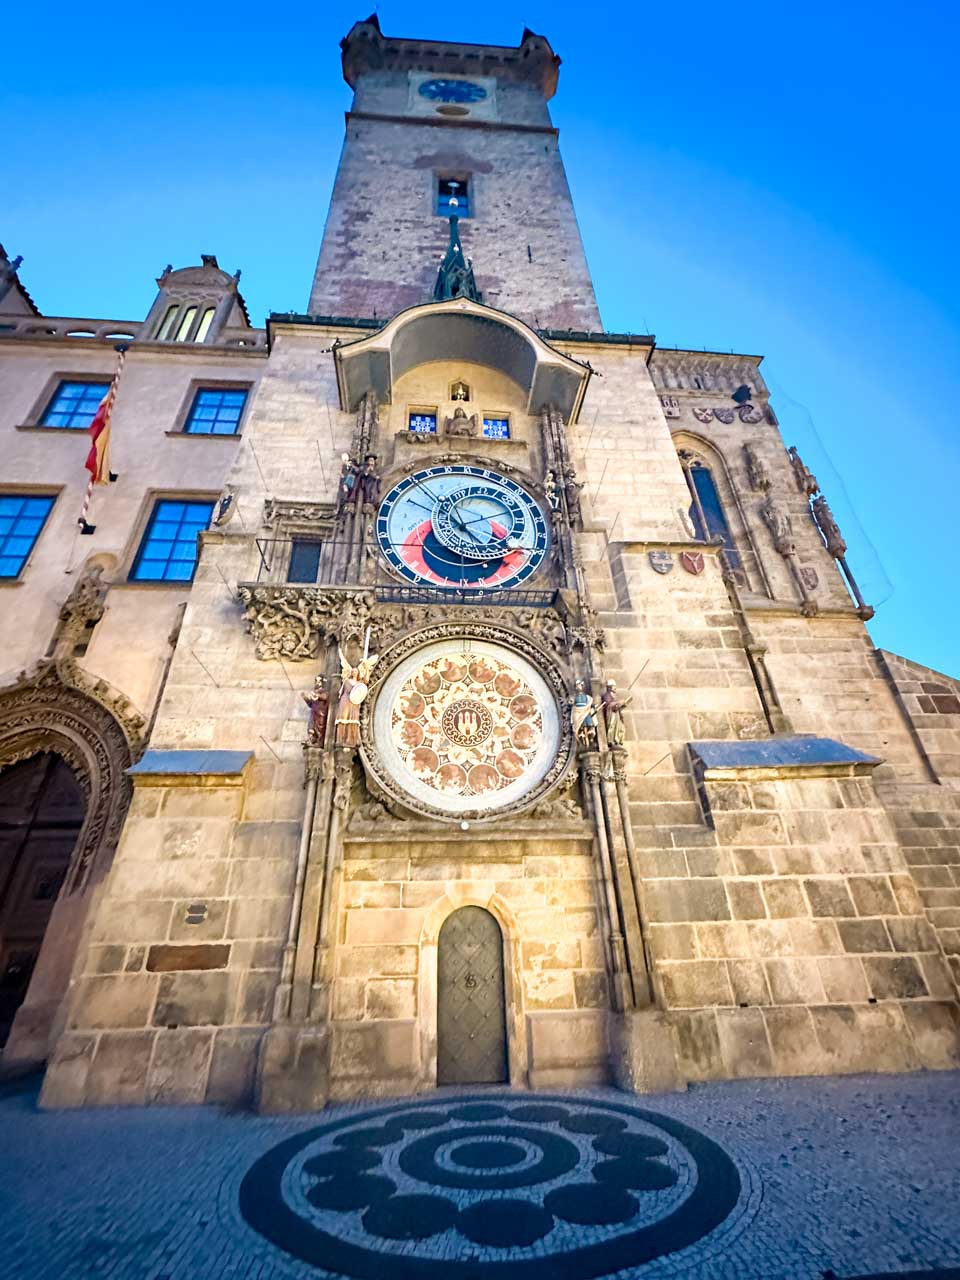 Prague Astronomical Clock / Orloj and the clock tower seen at night